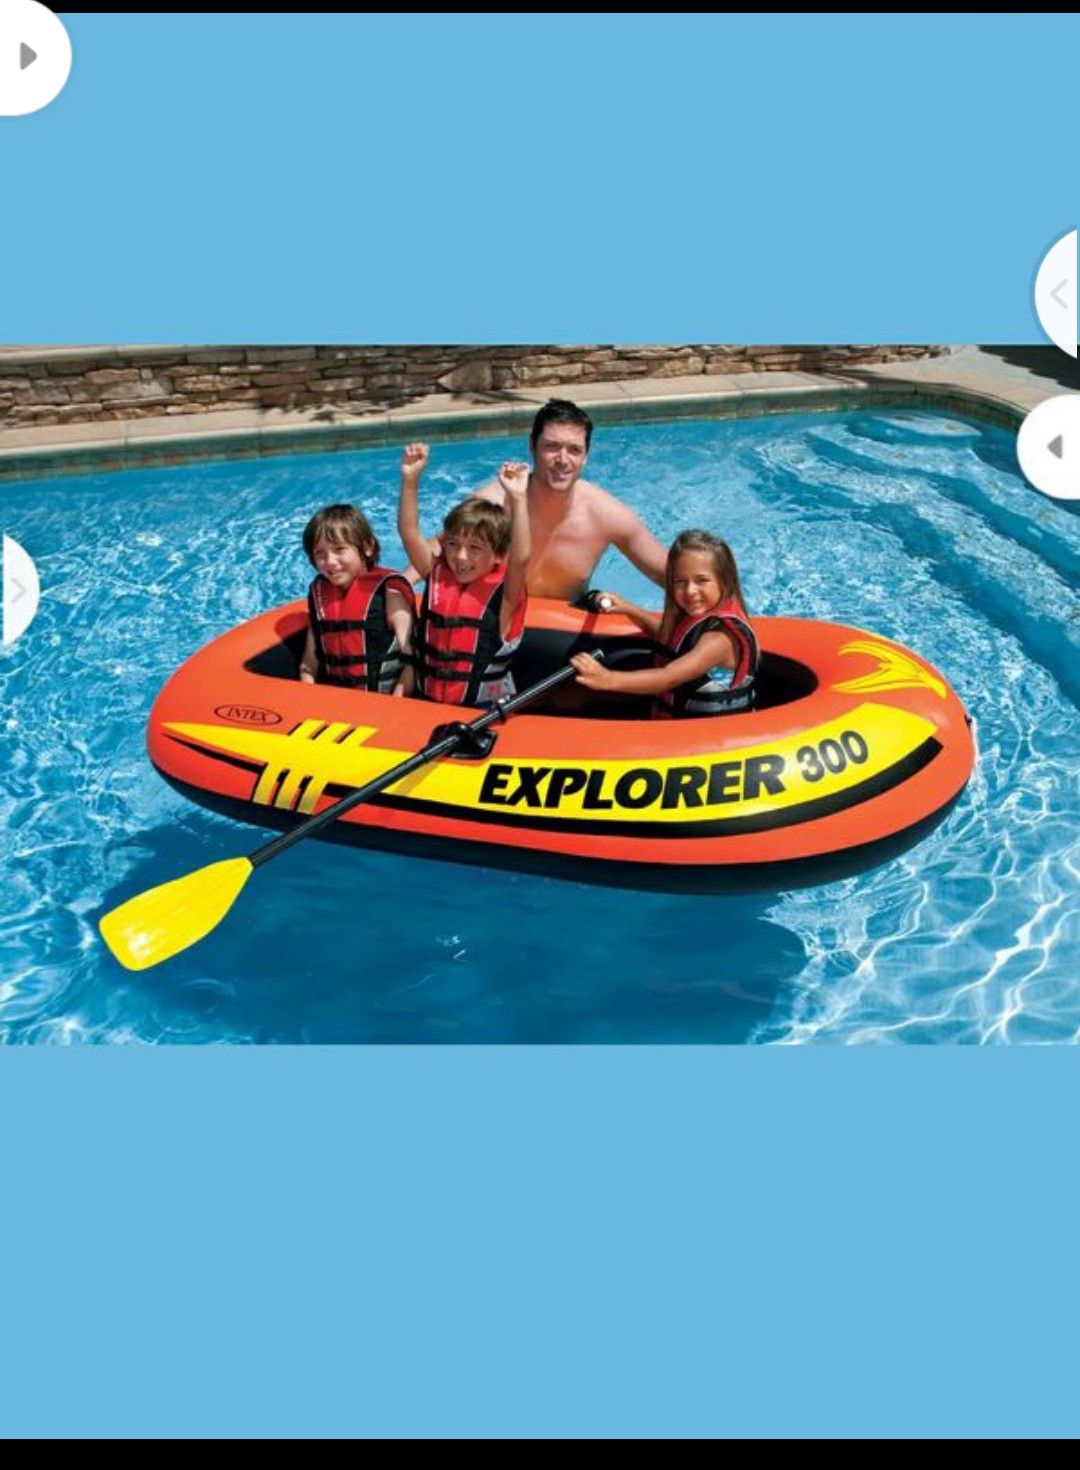 Intex Explorer 300 Compact Inflatable Fishing 3 Person Raft Boat w Pump & Oars